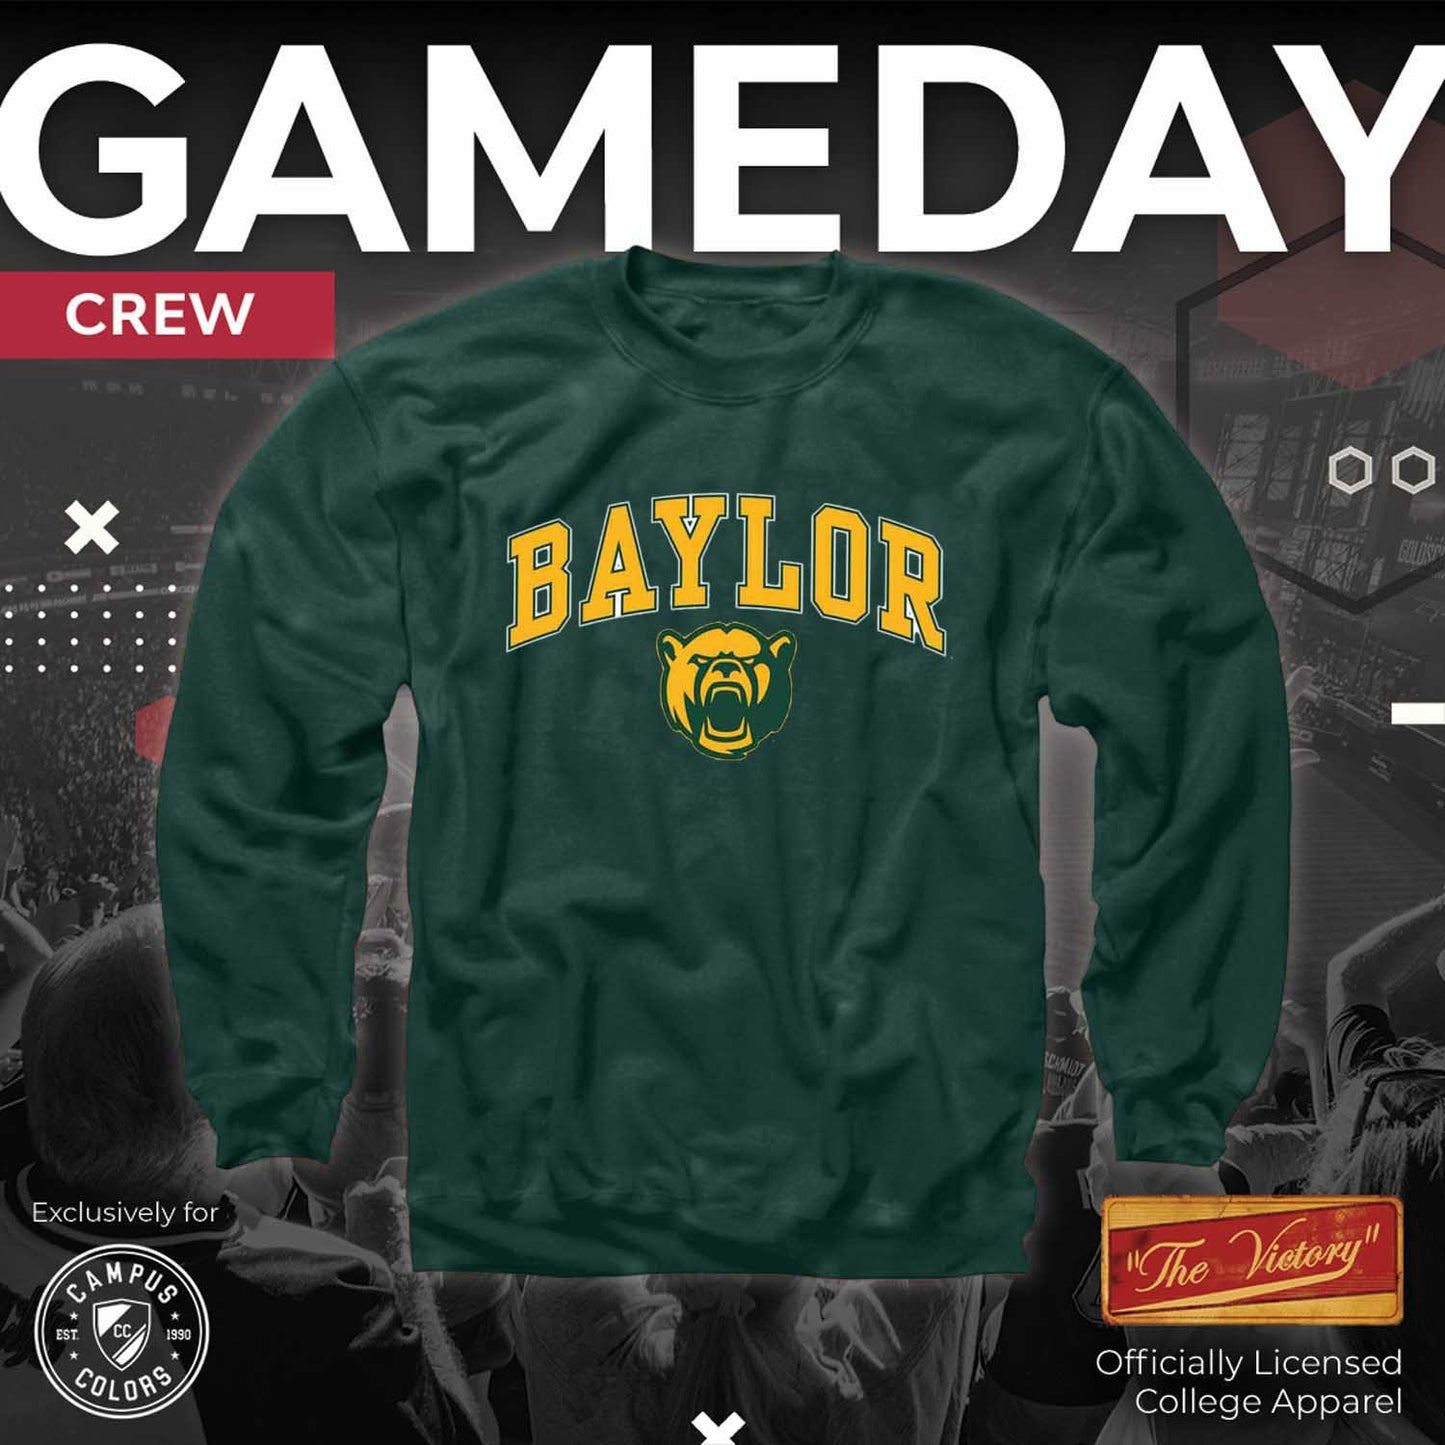 Baylor Bears Adult Arch & Logo Soft Style Gameday Crewneck Sweatshirt - Green